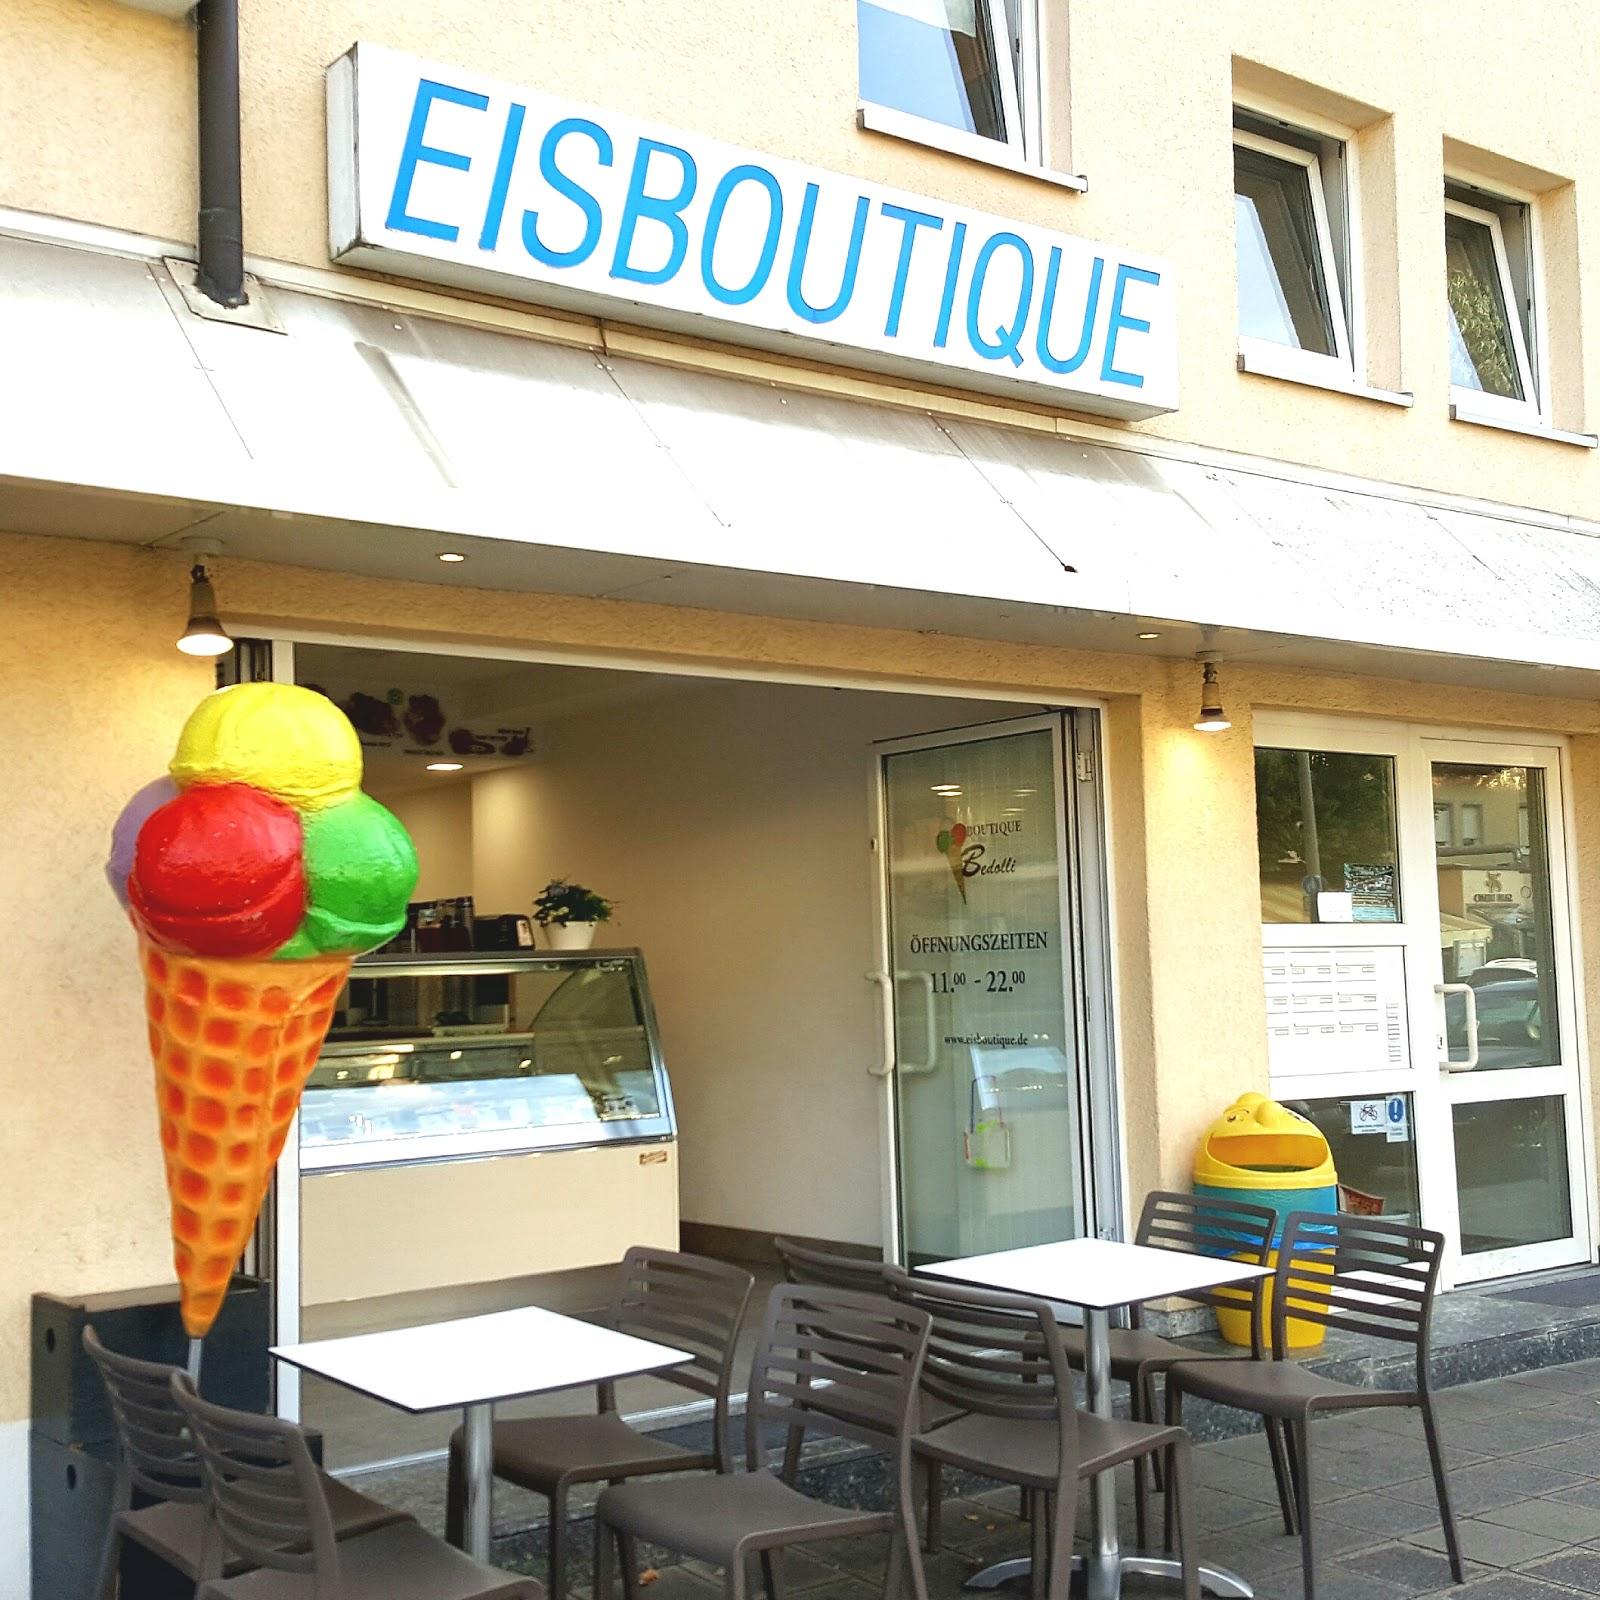 Restaurant "Eisboutique" in Nürnberg